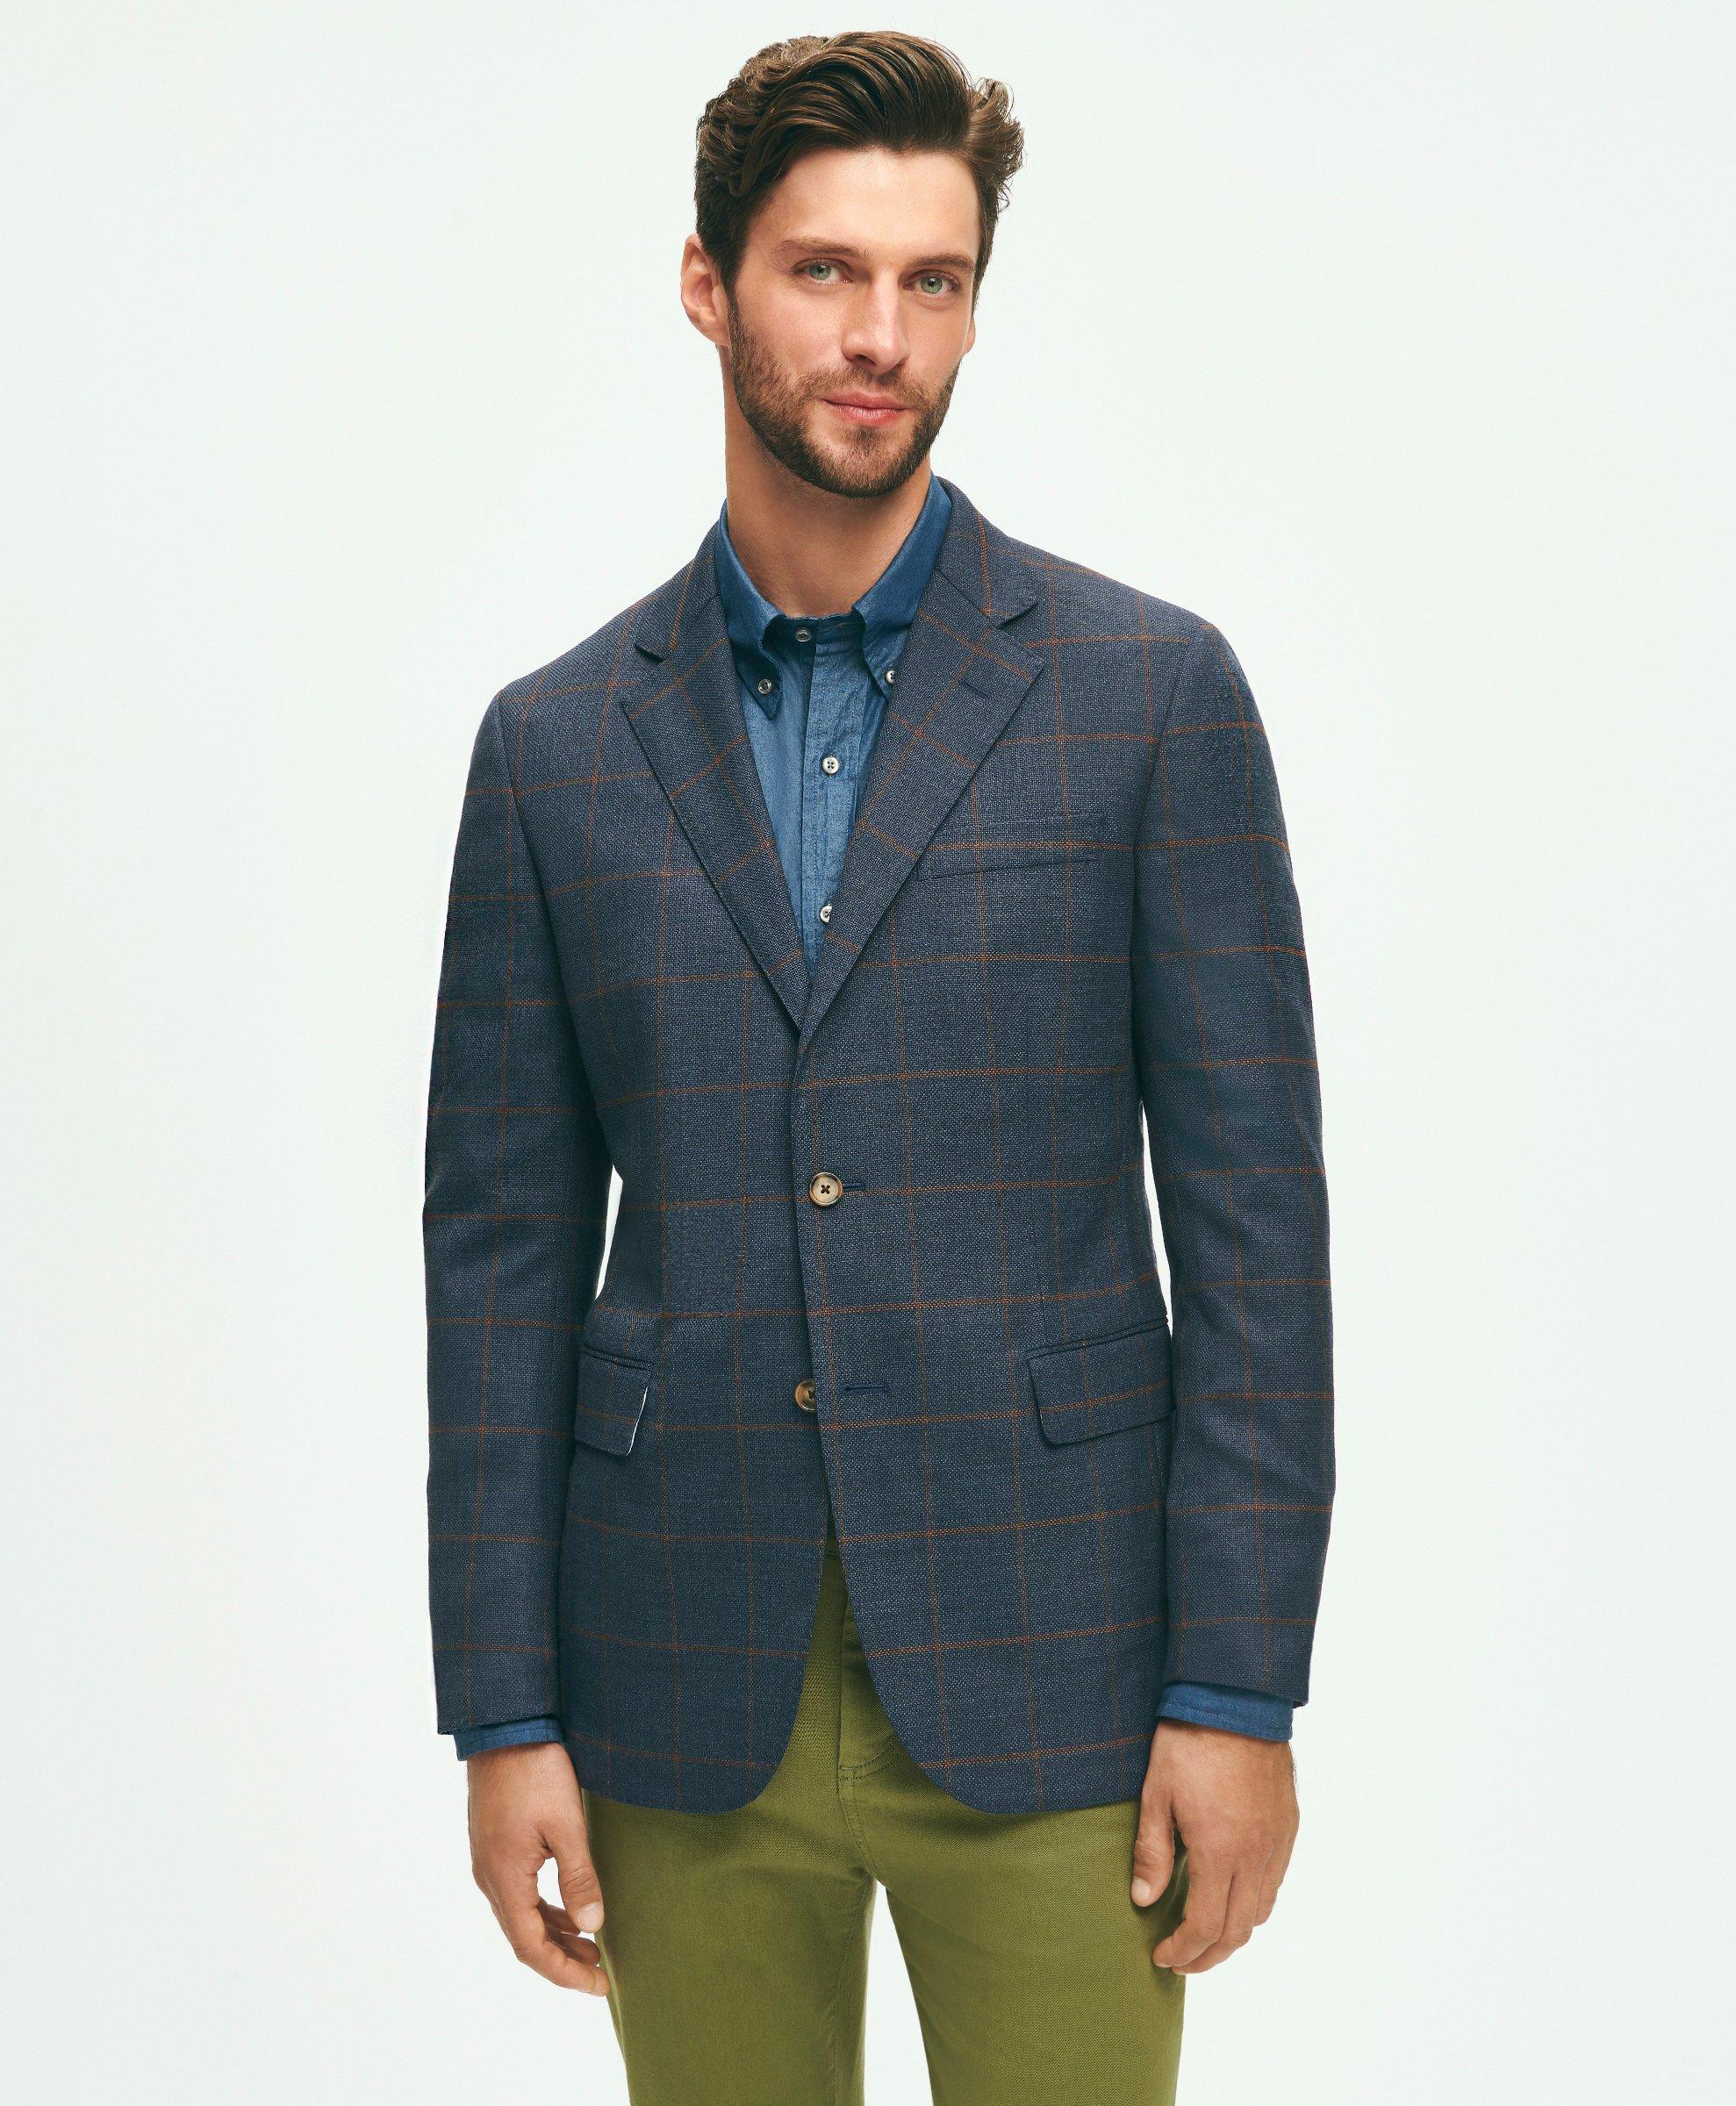 Men's 100% Cotton Flannel Robe - Windowpane Checks - Navy